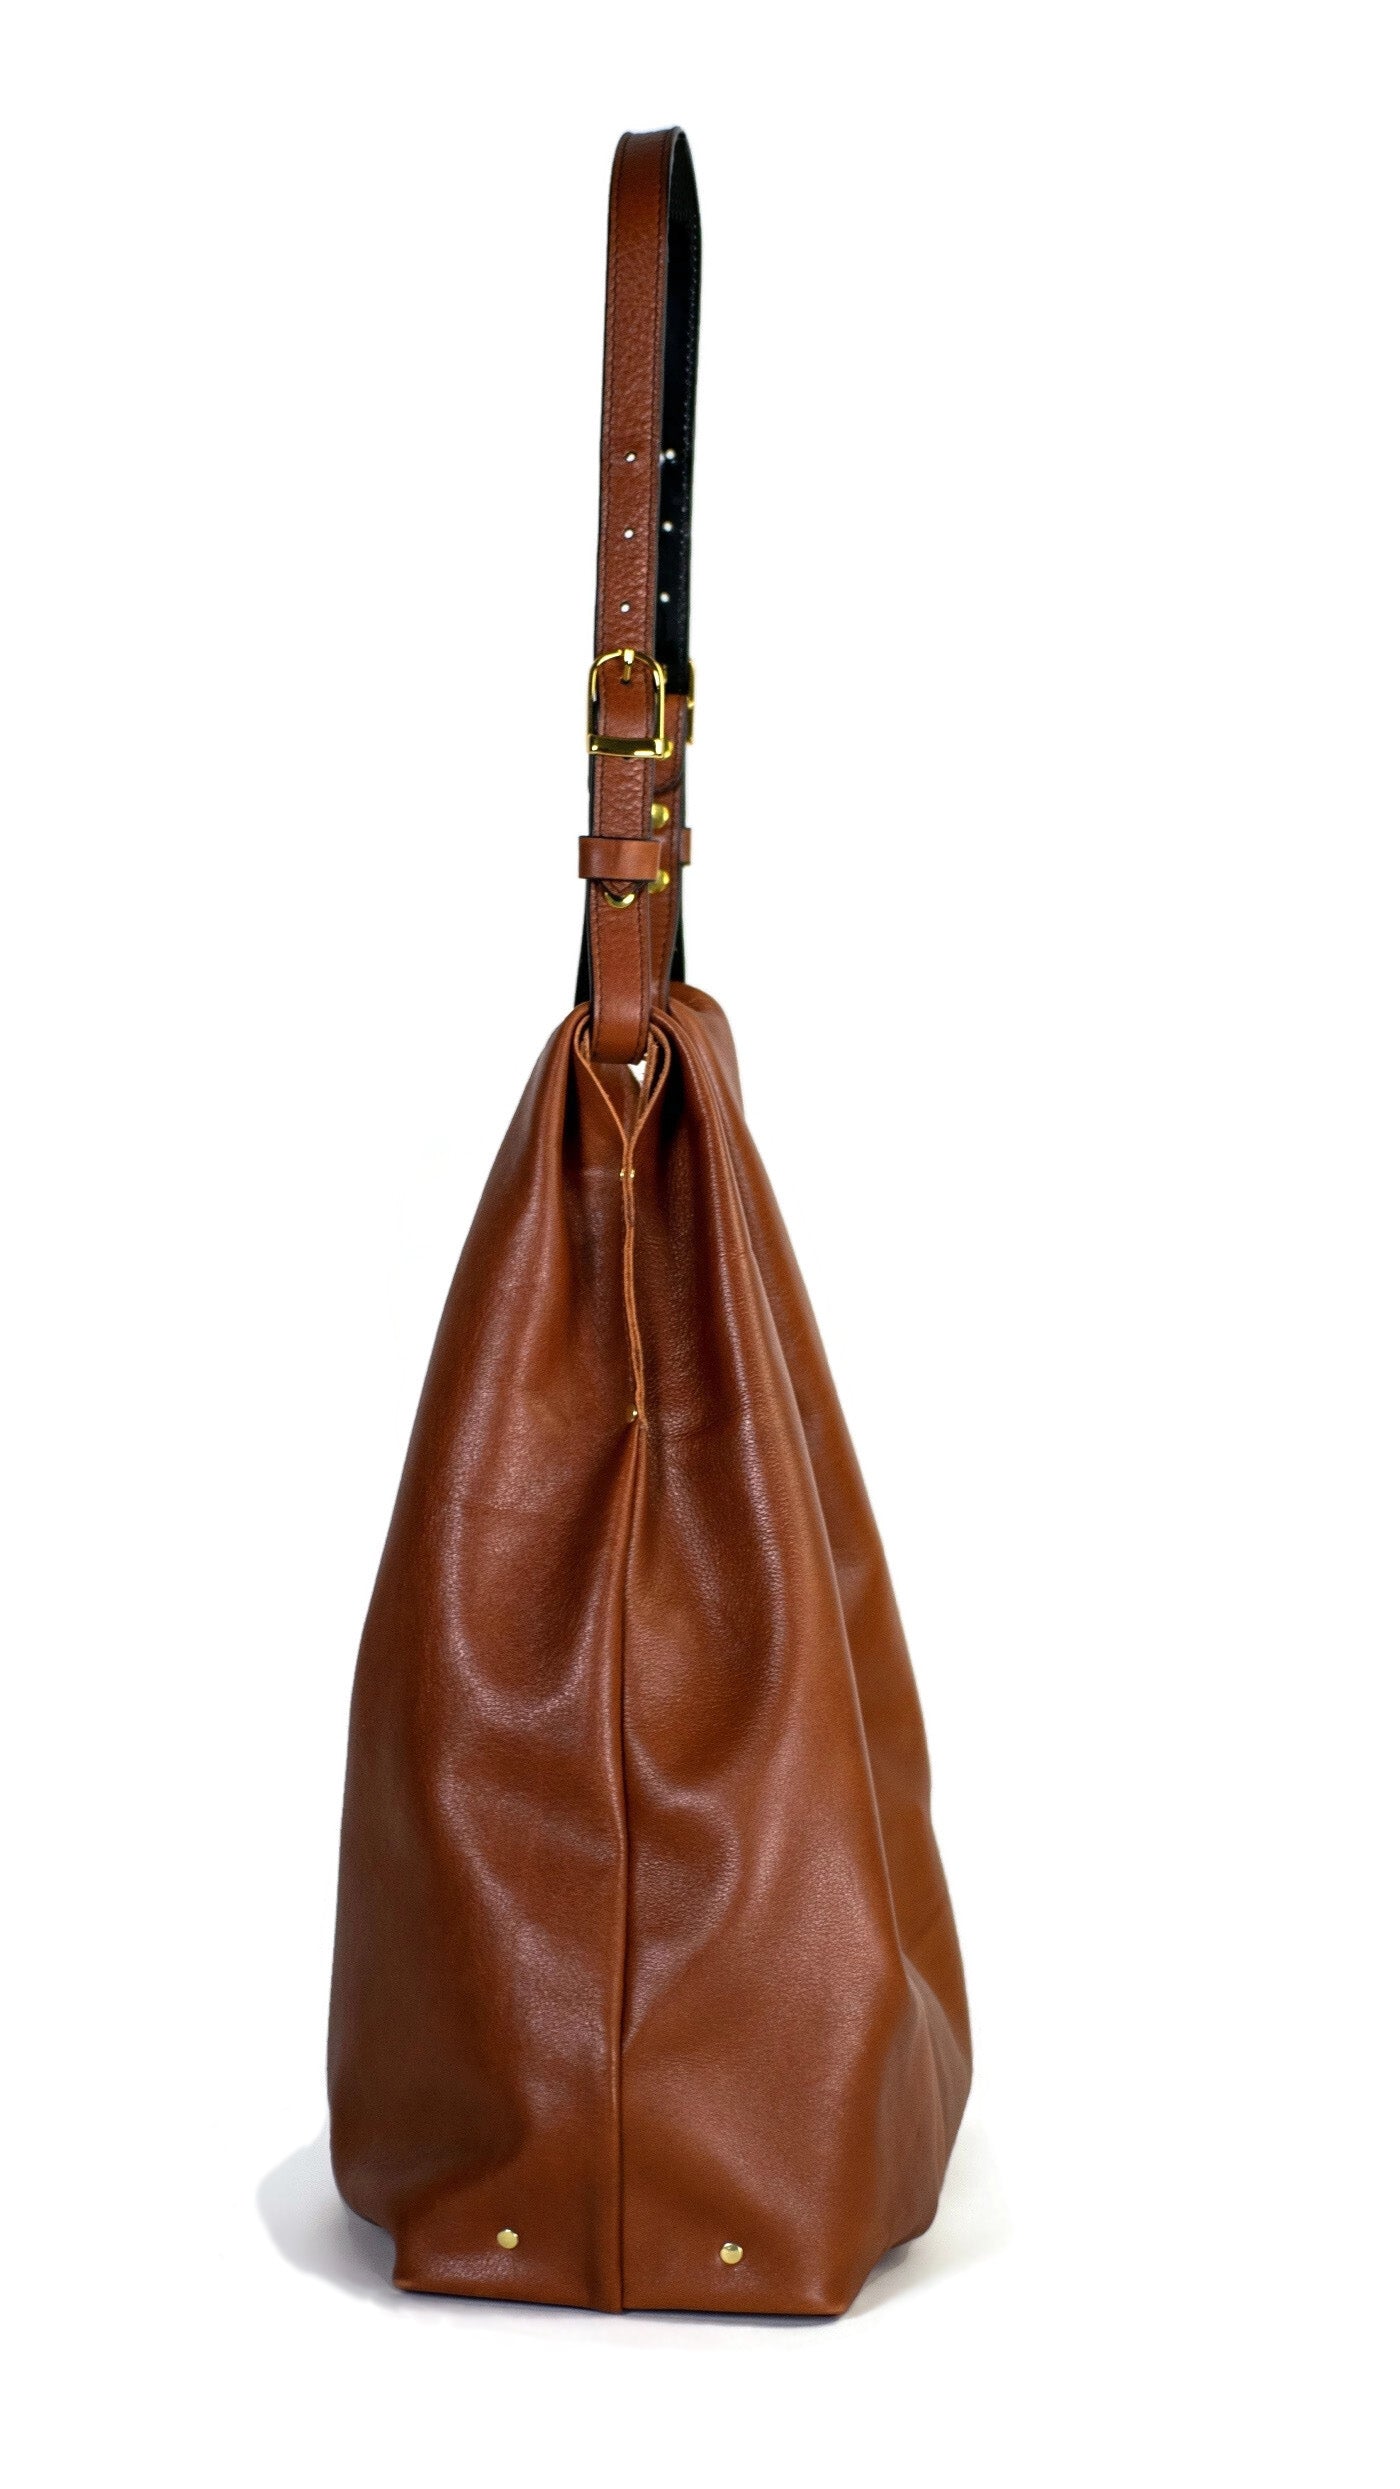 HOBO. Large women's hobo bag shoulder bag made of Italian leather